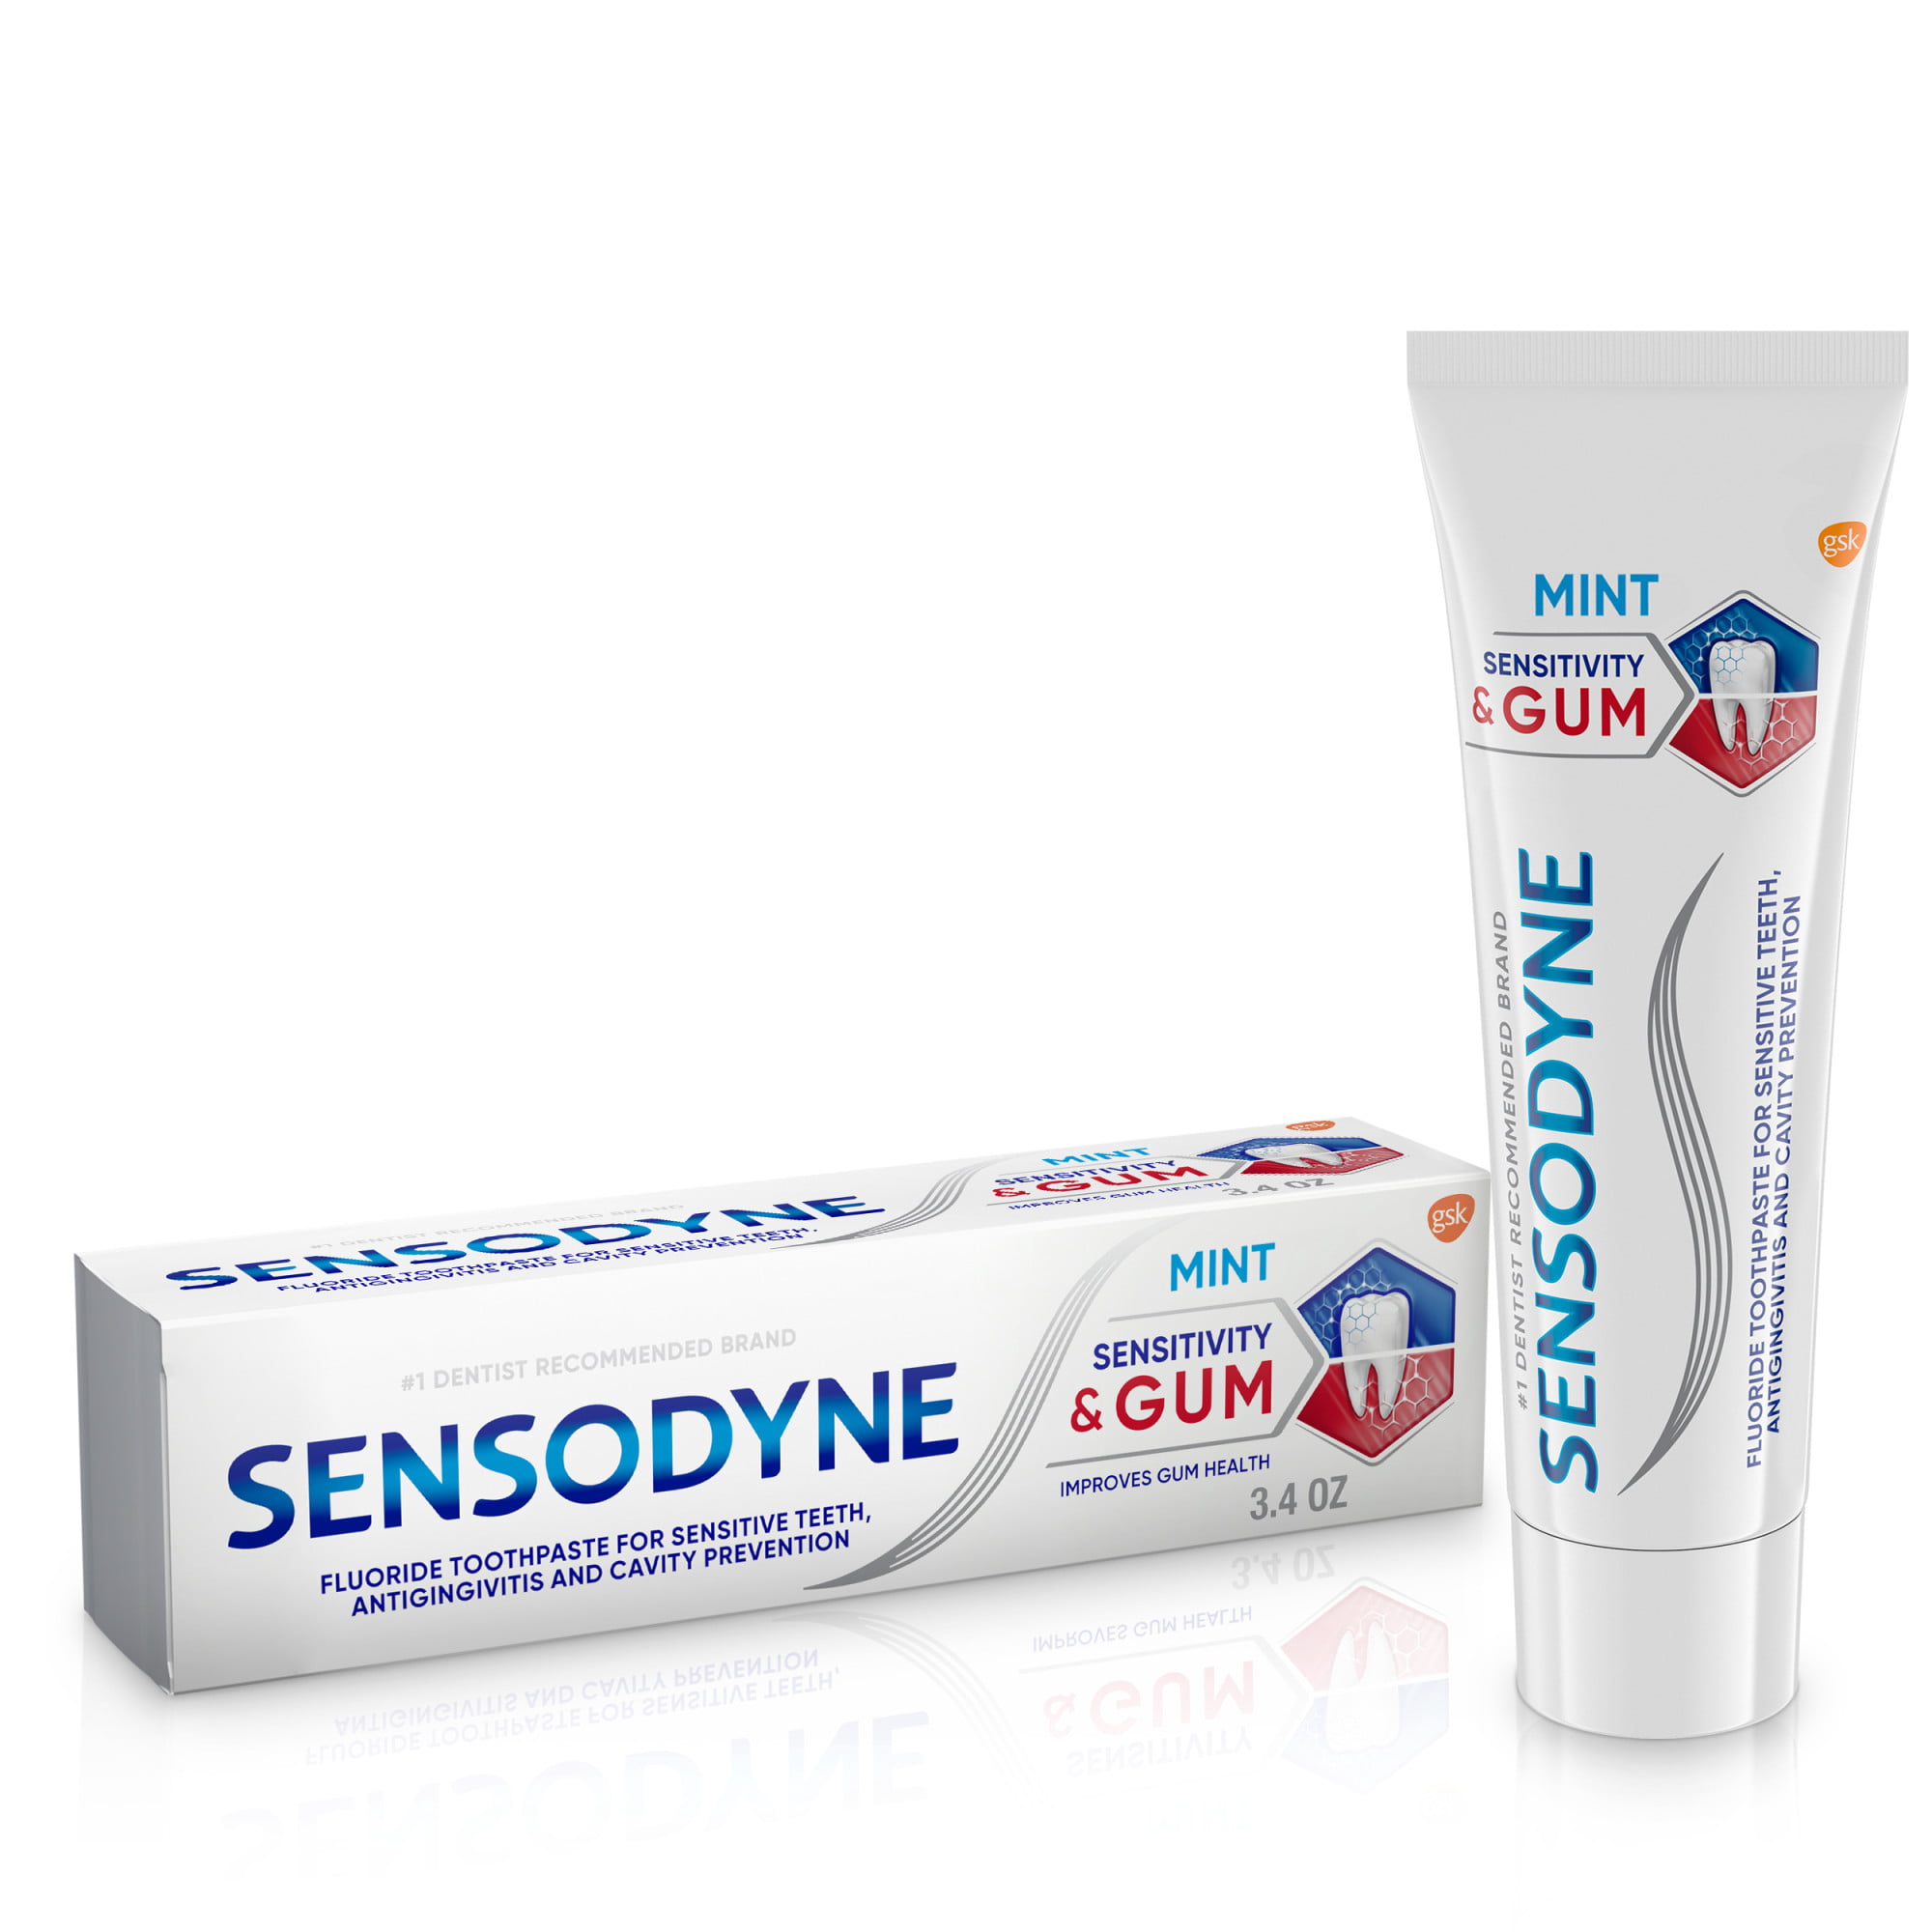 Sensodyne Sensitivity & Gum Sensitive Toothpaste, 3.4 Oz